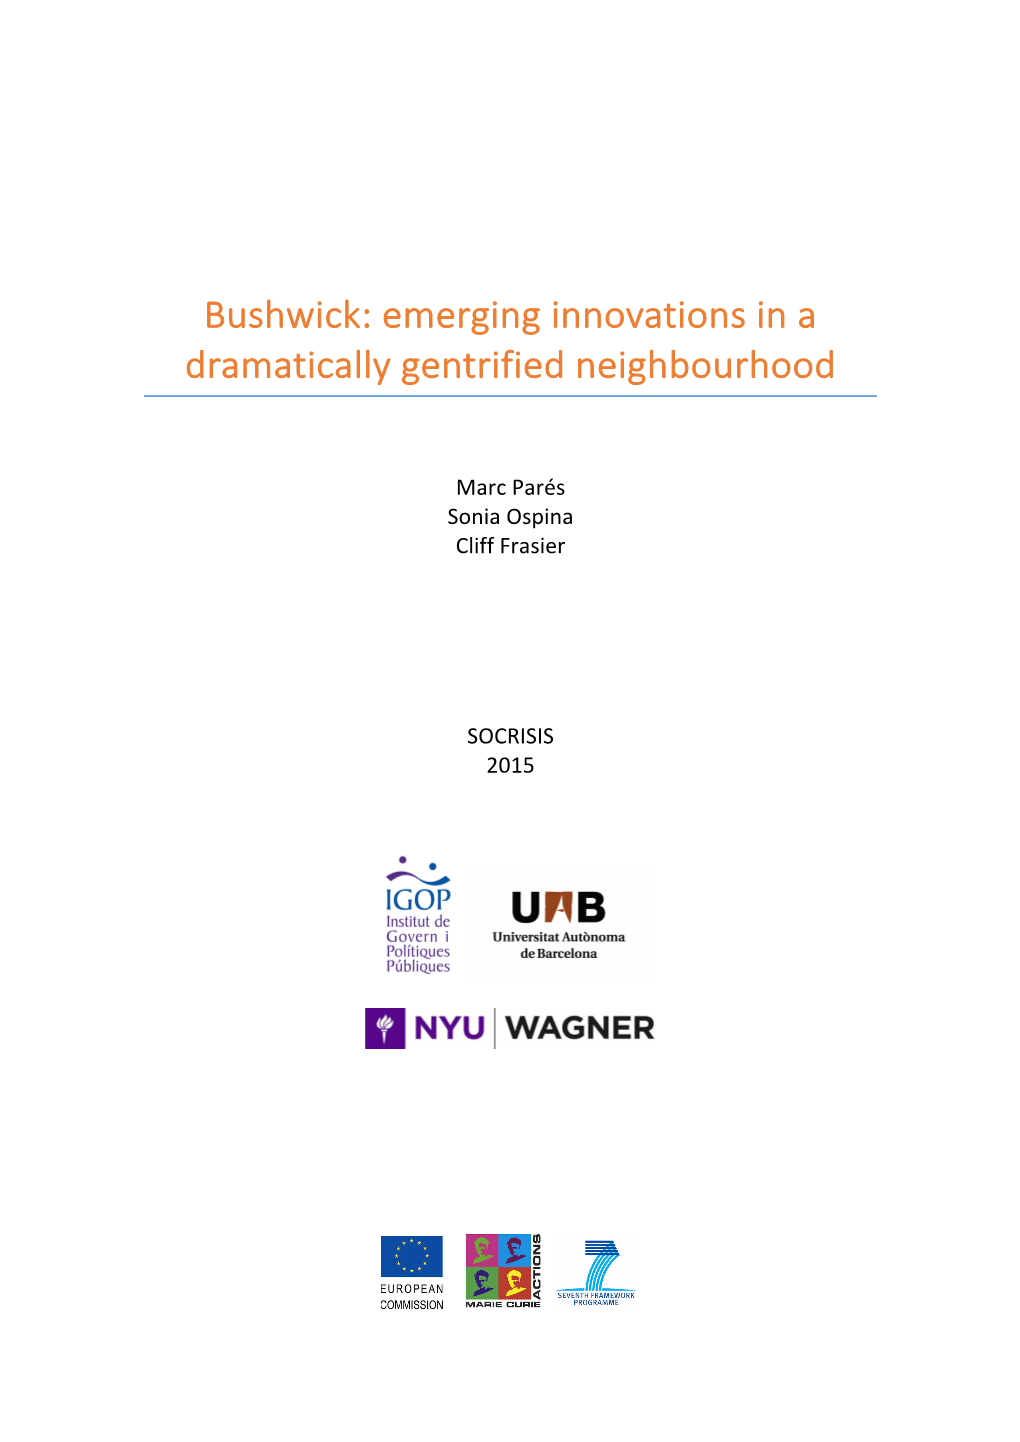 Bushwick: Emerging Innovations in a Dramatically Gentrified Neighbourhood